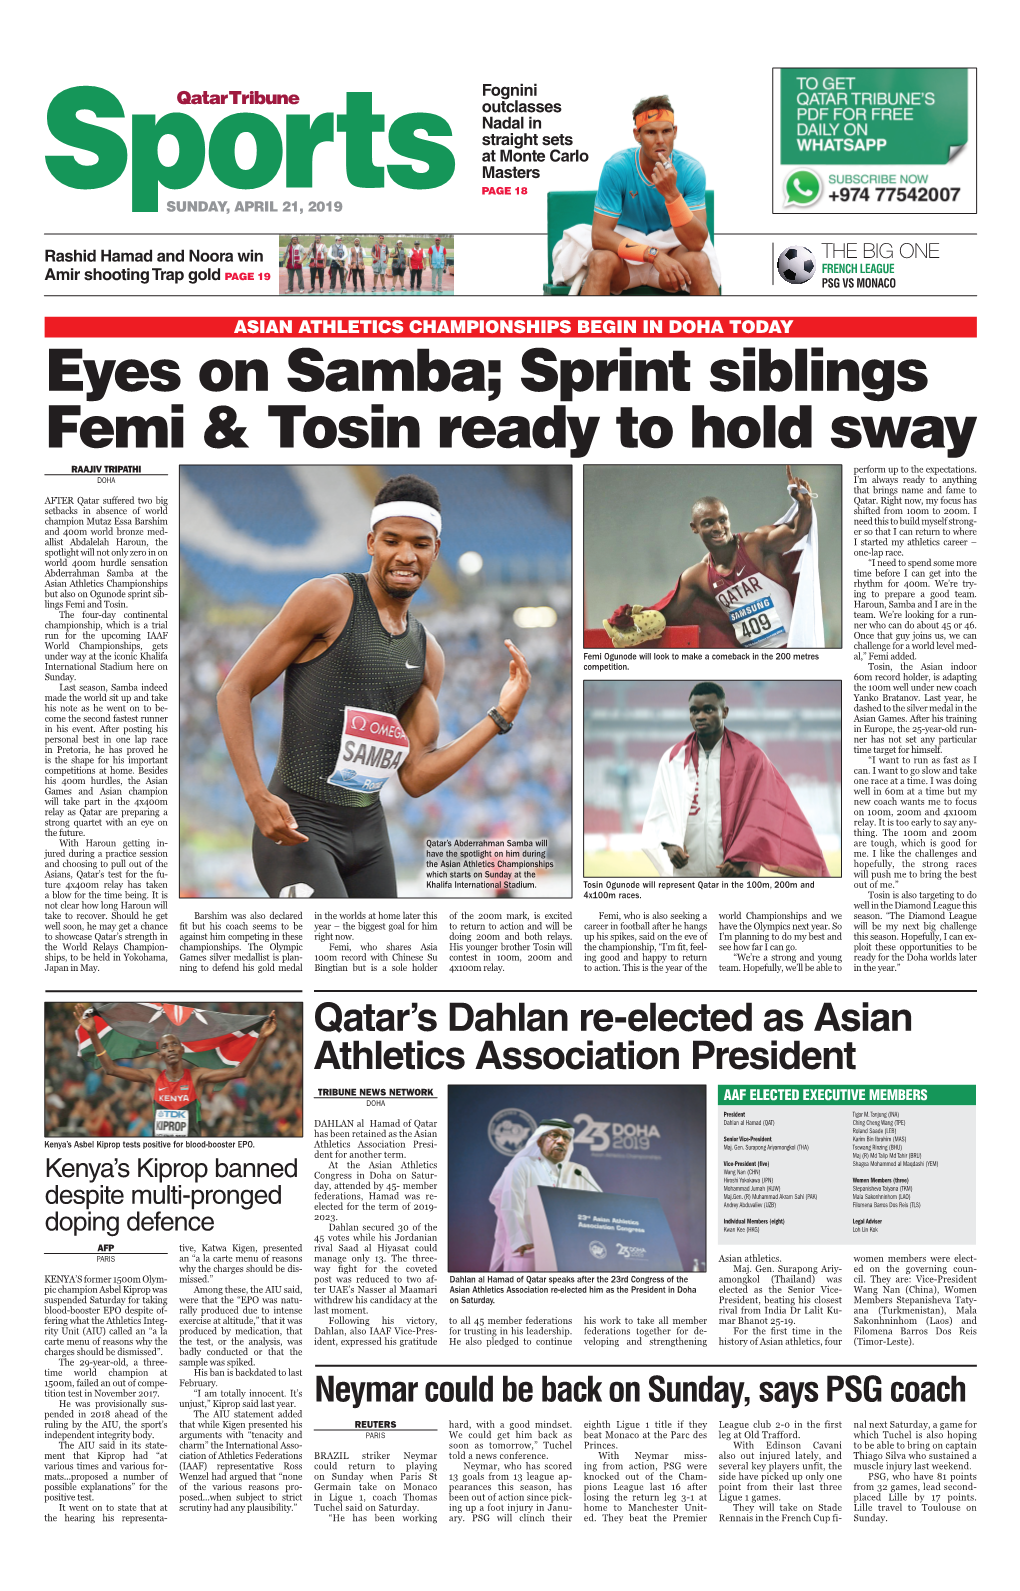 Eyes on Samba; Sprint Siblings Femi & Tosin Ready to Hold Sway